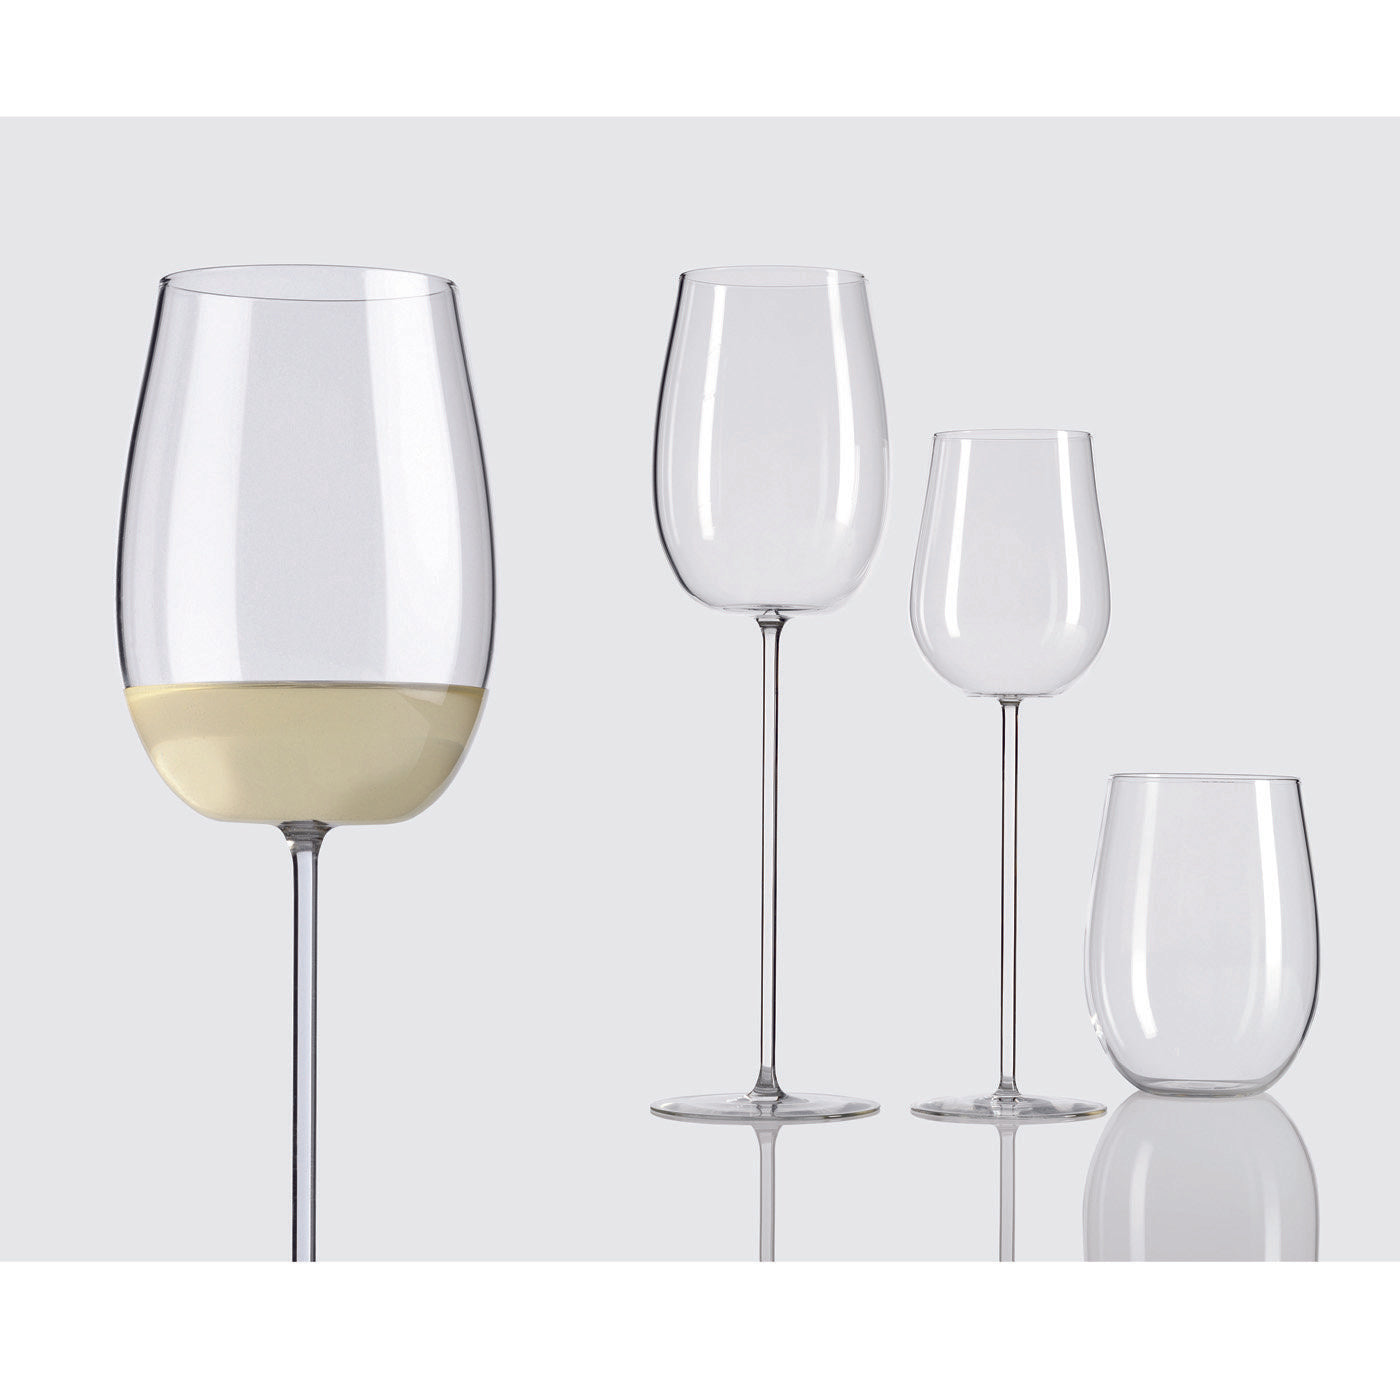 Set of 6 Modigliani Red Wine Glasses  - Alternative view 1